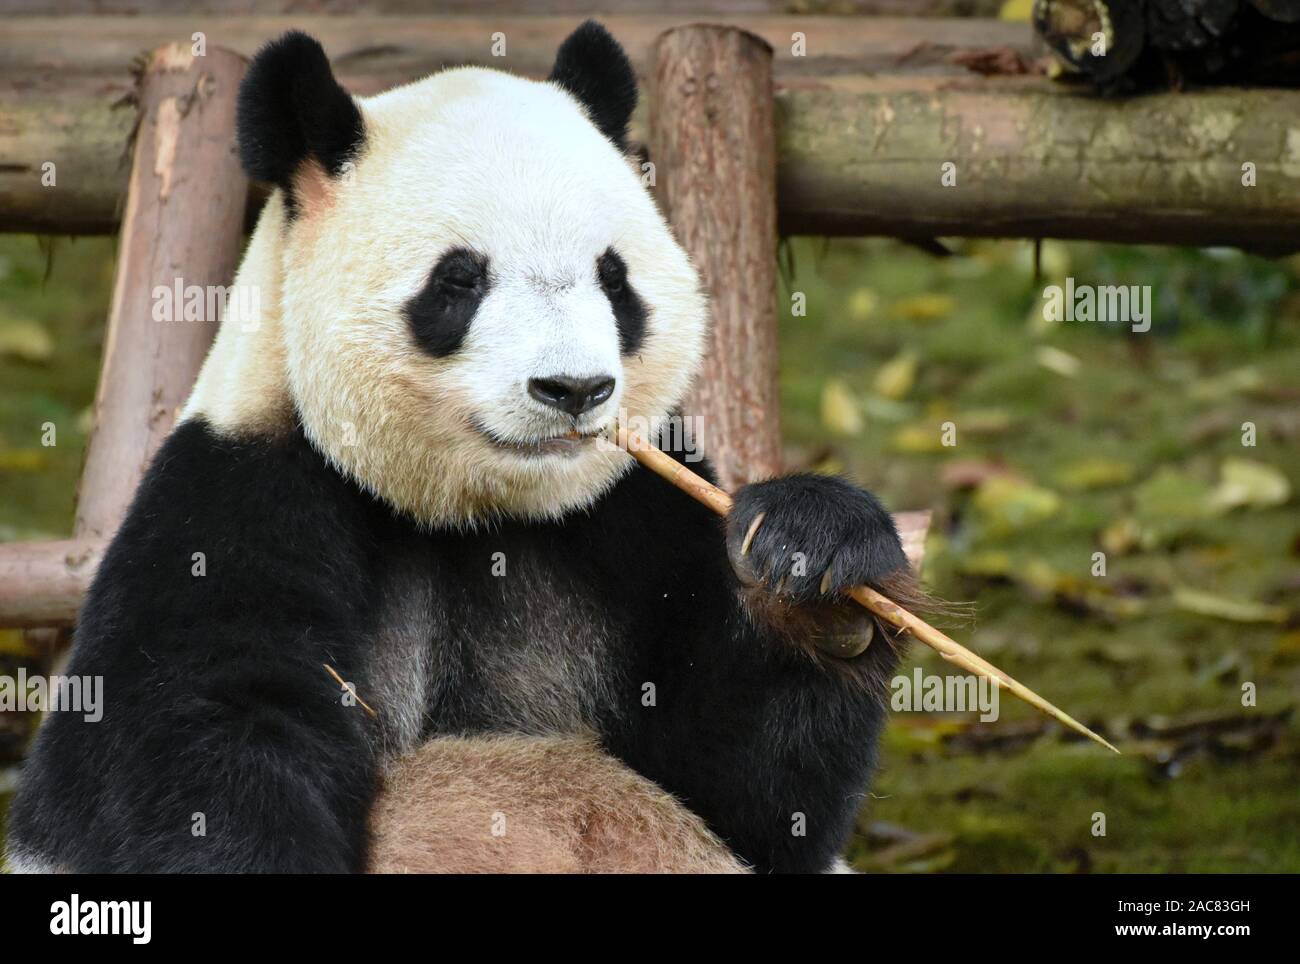 Panda bear enjoys eating bamboo shoot, close up front face portrait Stock Photo